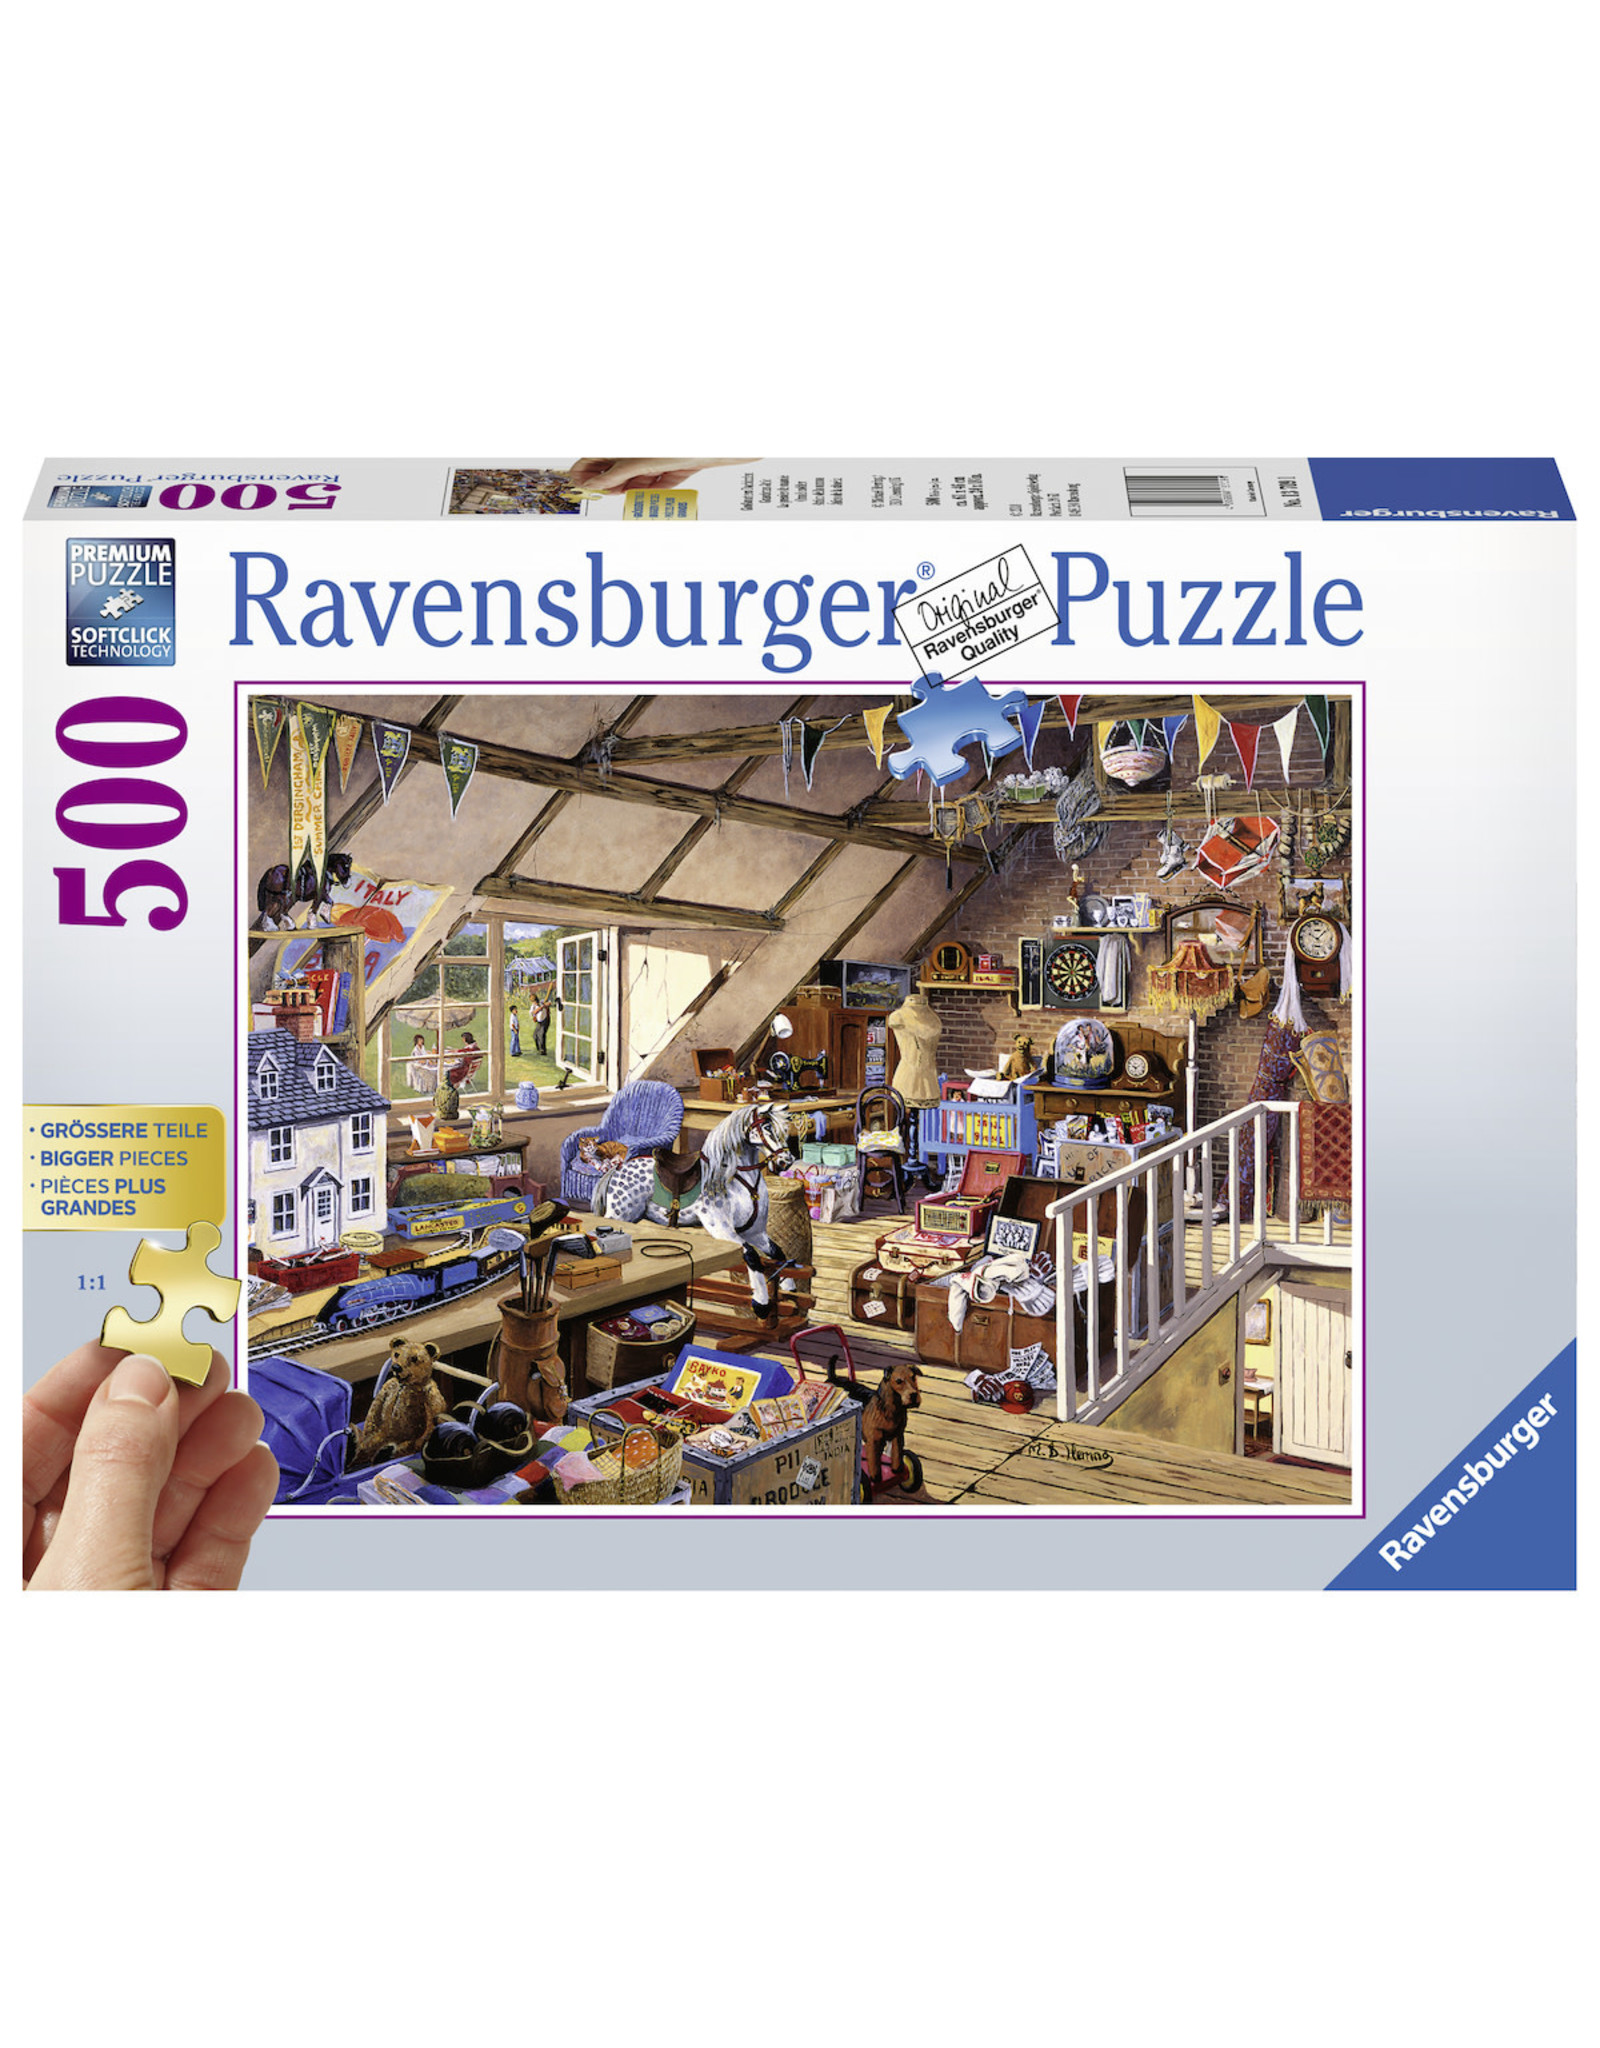 Ravensburger Ravensburger puzzel Oma'S Zolder  500 stukjes  extra groot